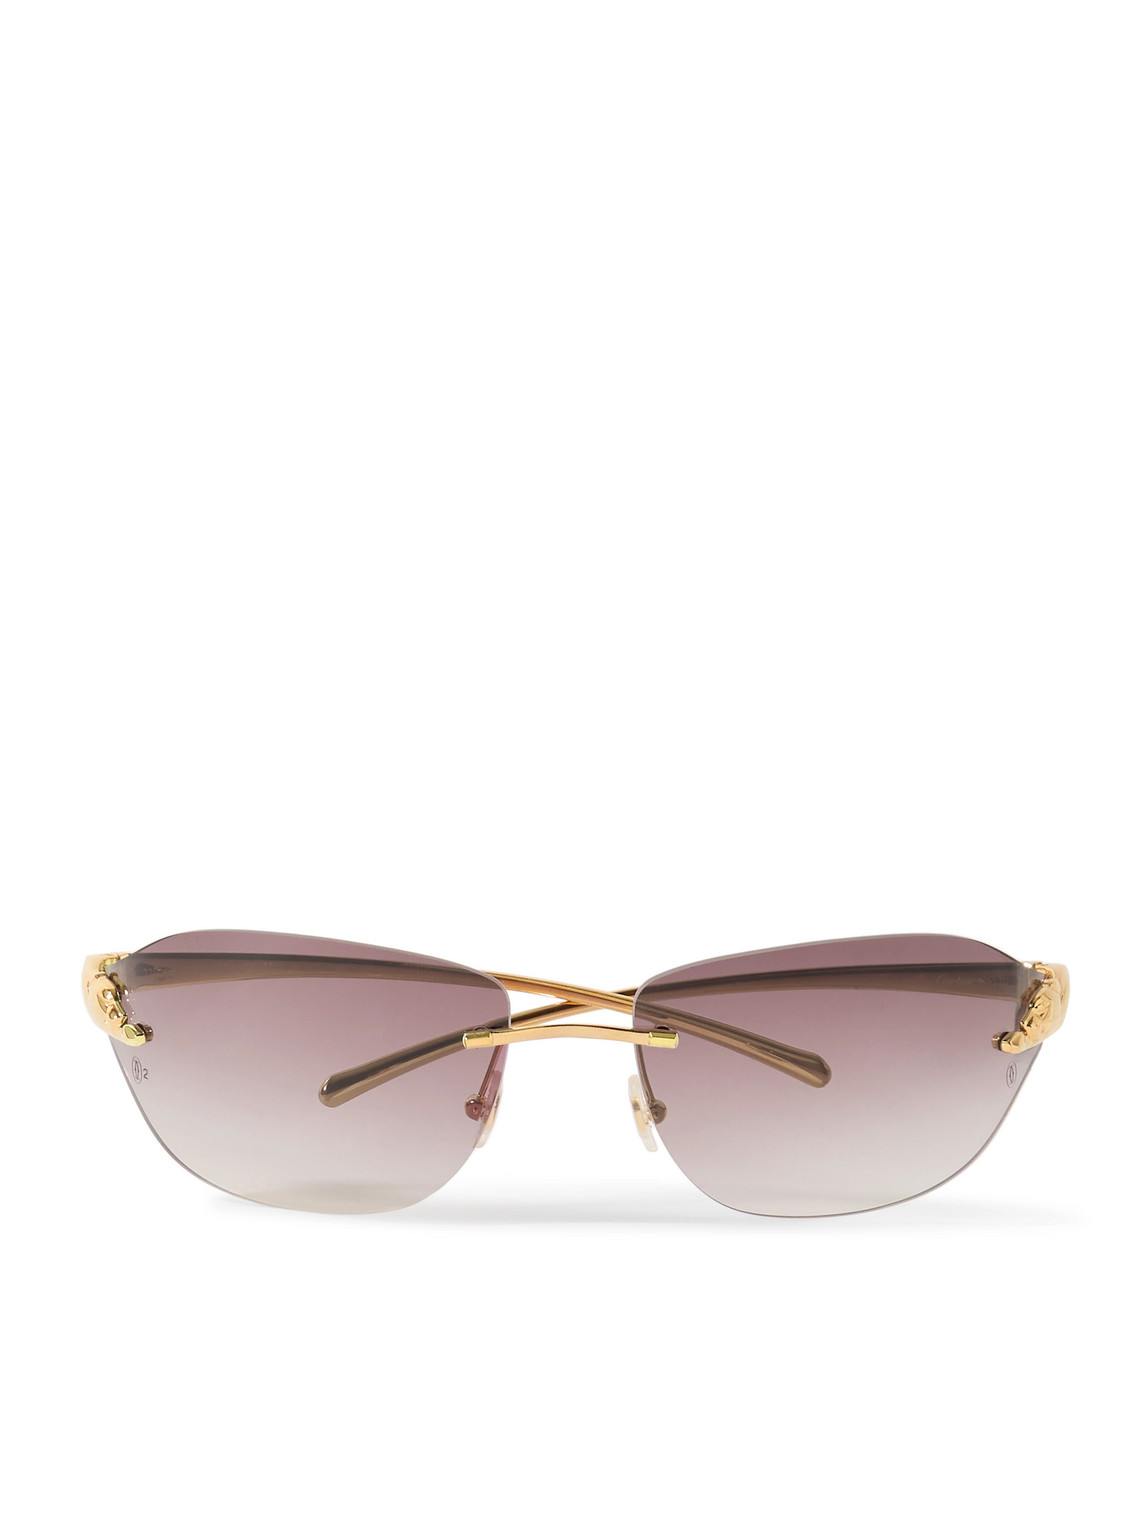 Cartier Eyewear - Panthère Classic Rimless Square-Frame Gold-Tone Sunglasses - Men - Gold von Cartier Eyewear